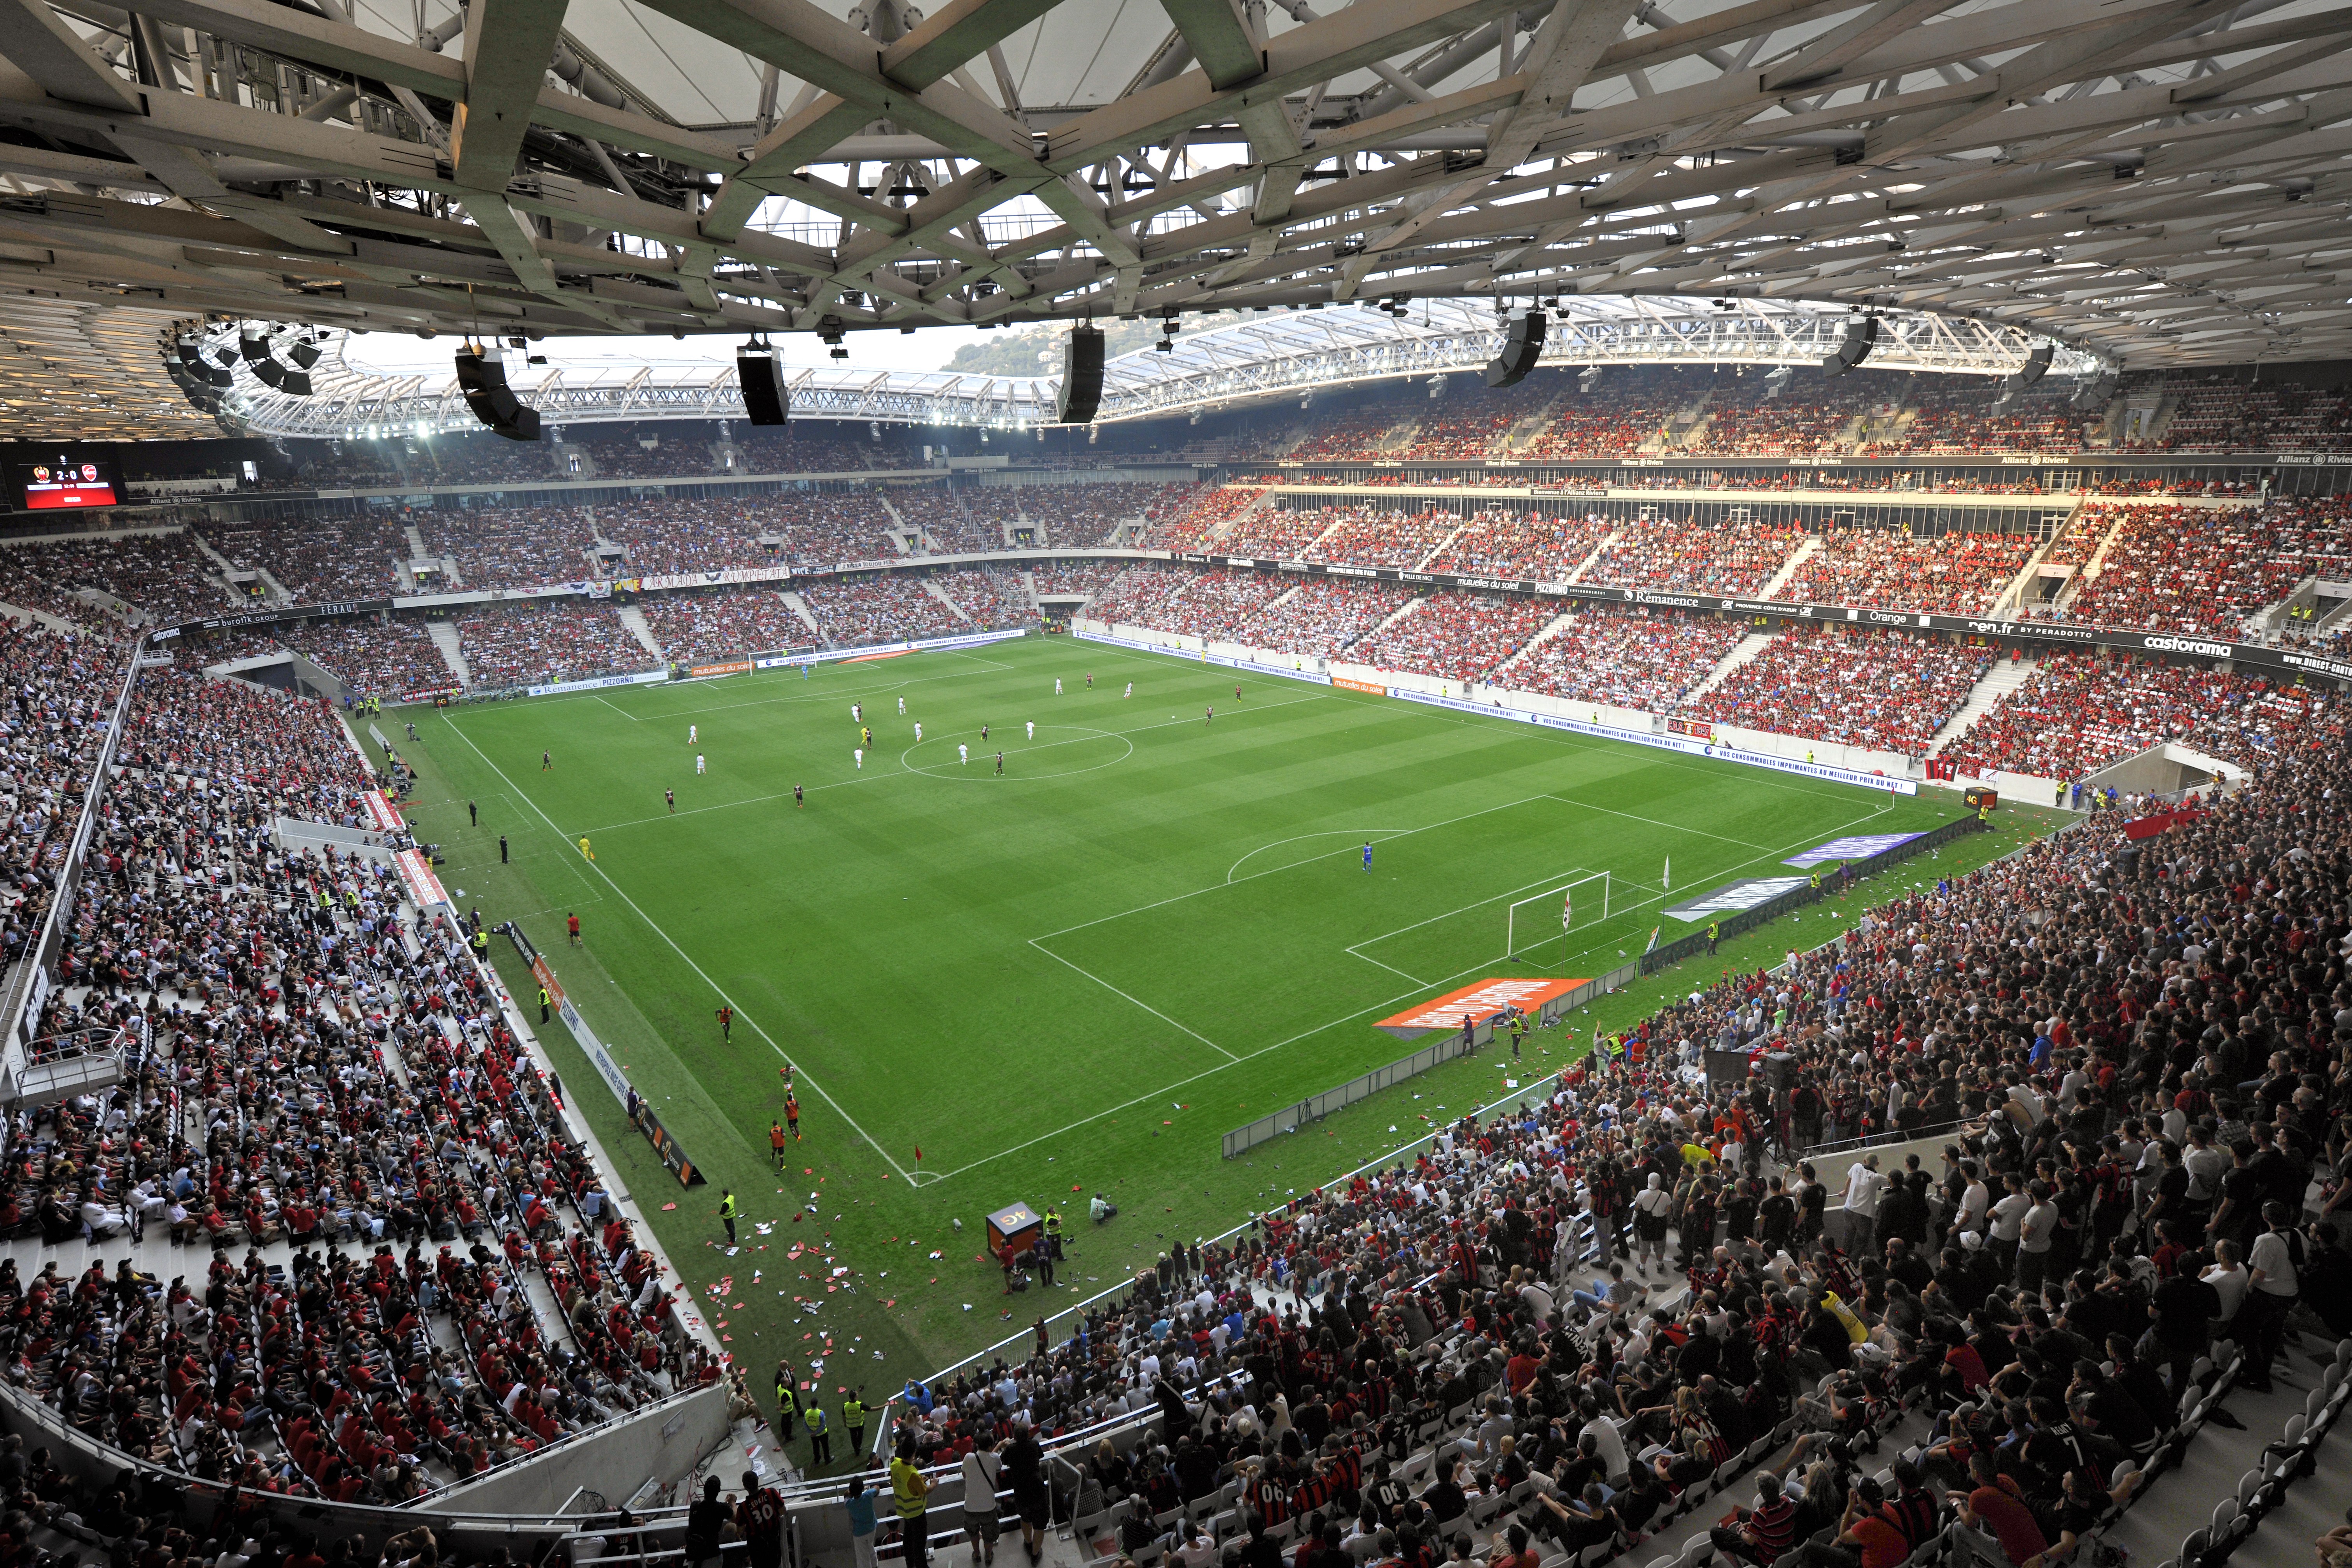 Allianz Riviera Nice Un Stade Respectueux De L Environnement Filiere 3e